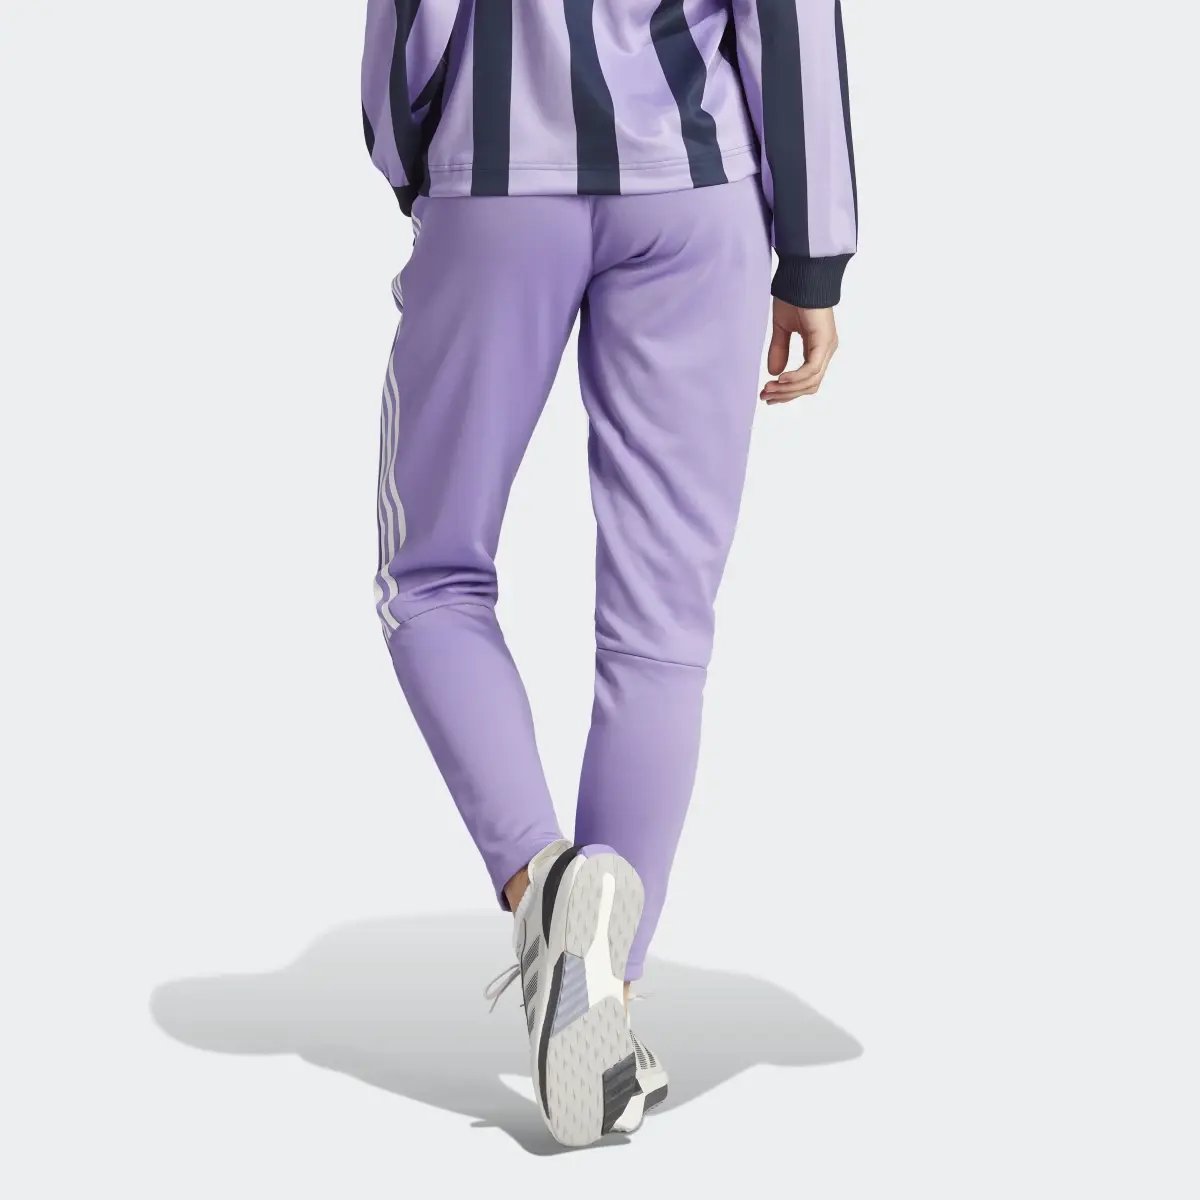 Adidas Pants Deportivo Tiro Suit Up Lifestyle. 2